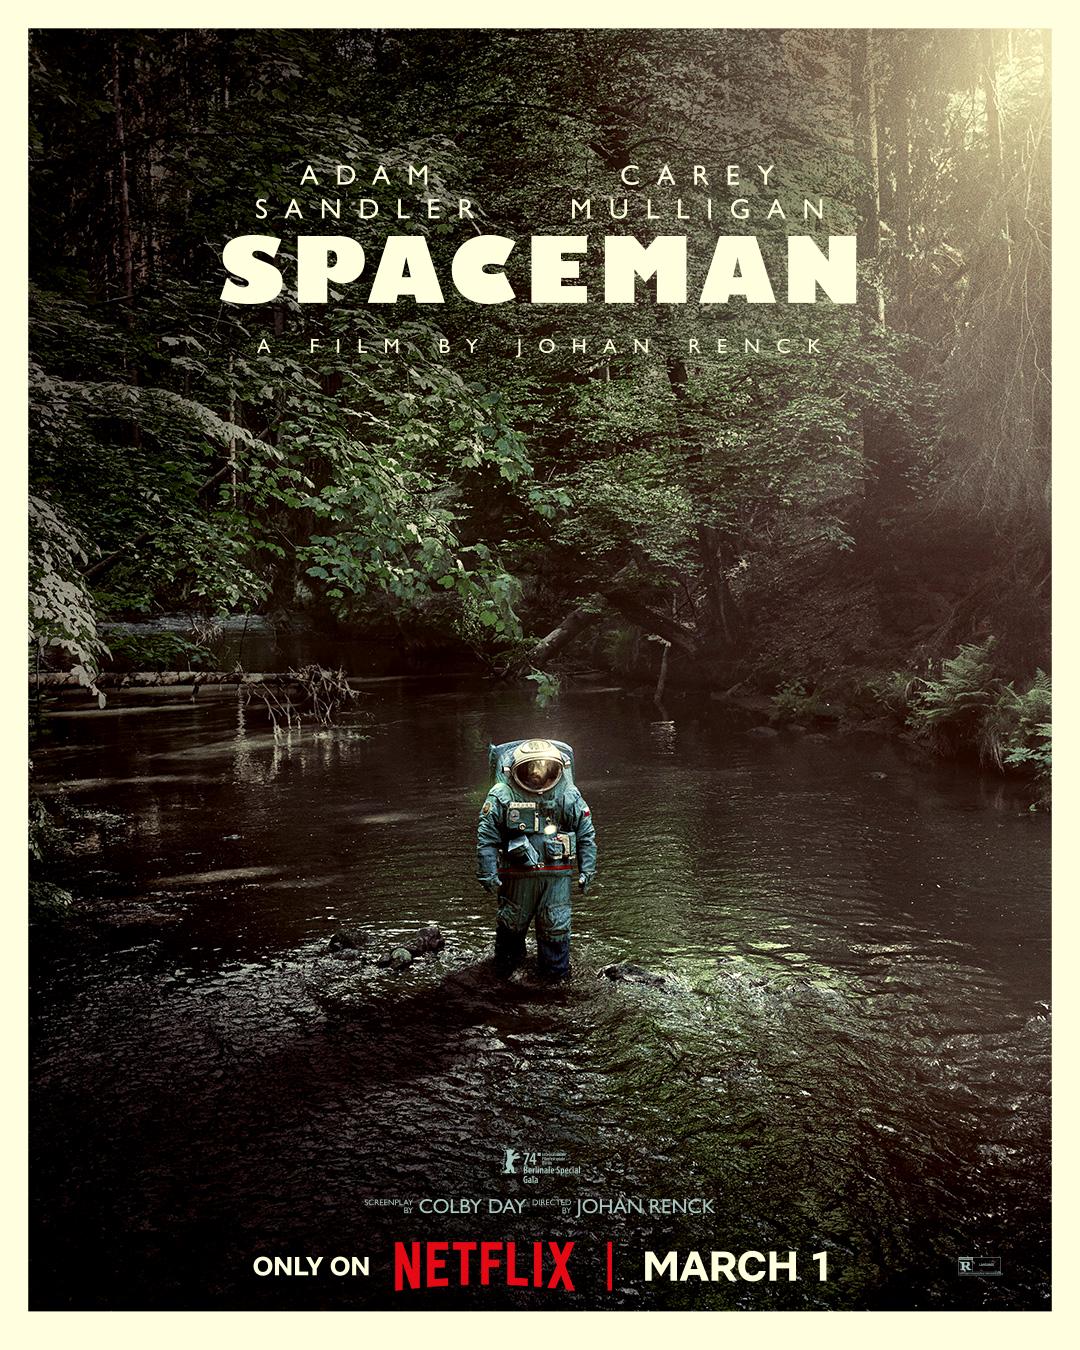 spaceman adam sandler netflix poster